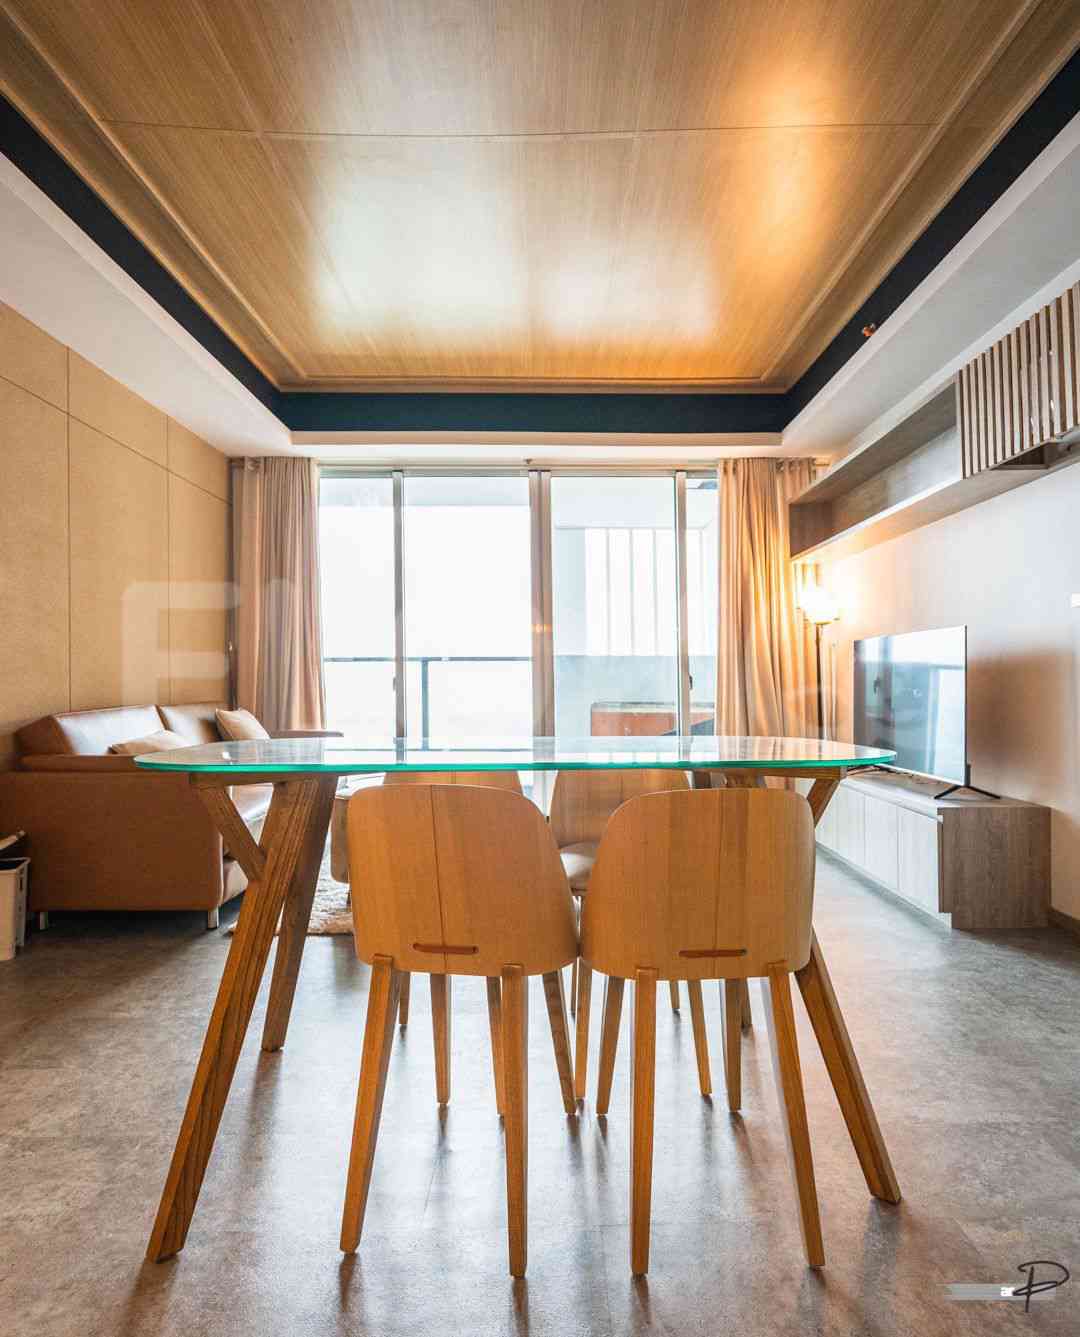 2 Bedroom on 20th Floor for Rent in Kemang Village Residence - fke7b0 11